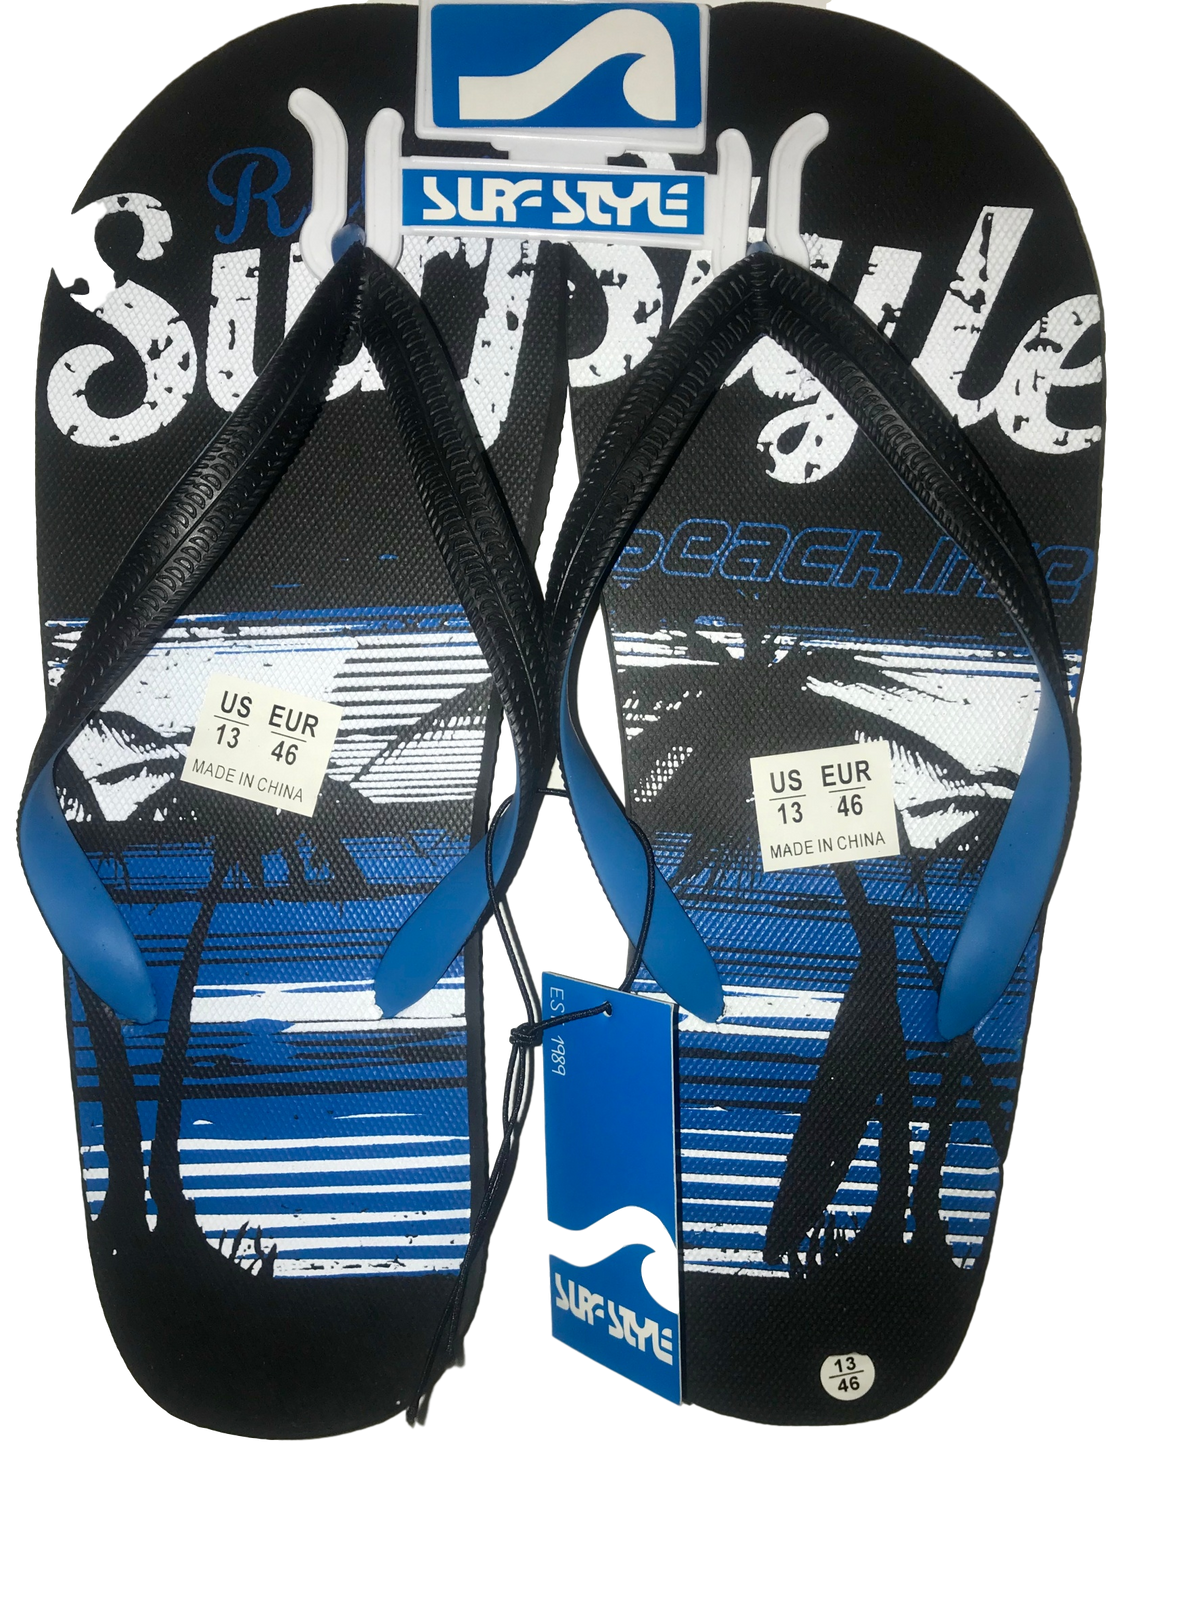 surf style flip flops